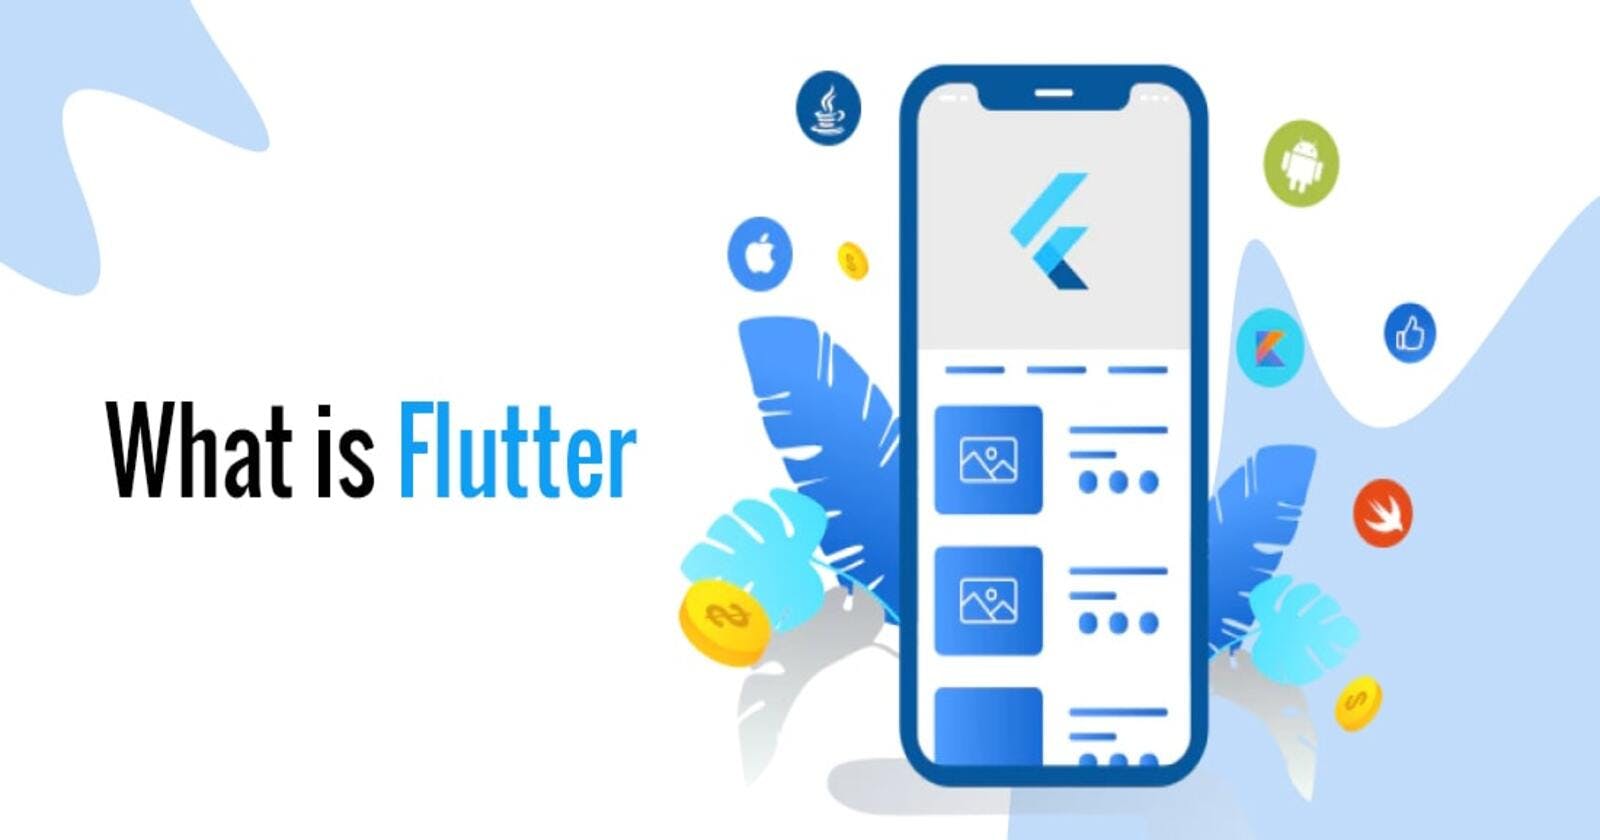 Getting Started With Flutter: A Beginnerâs Guide